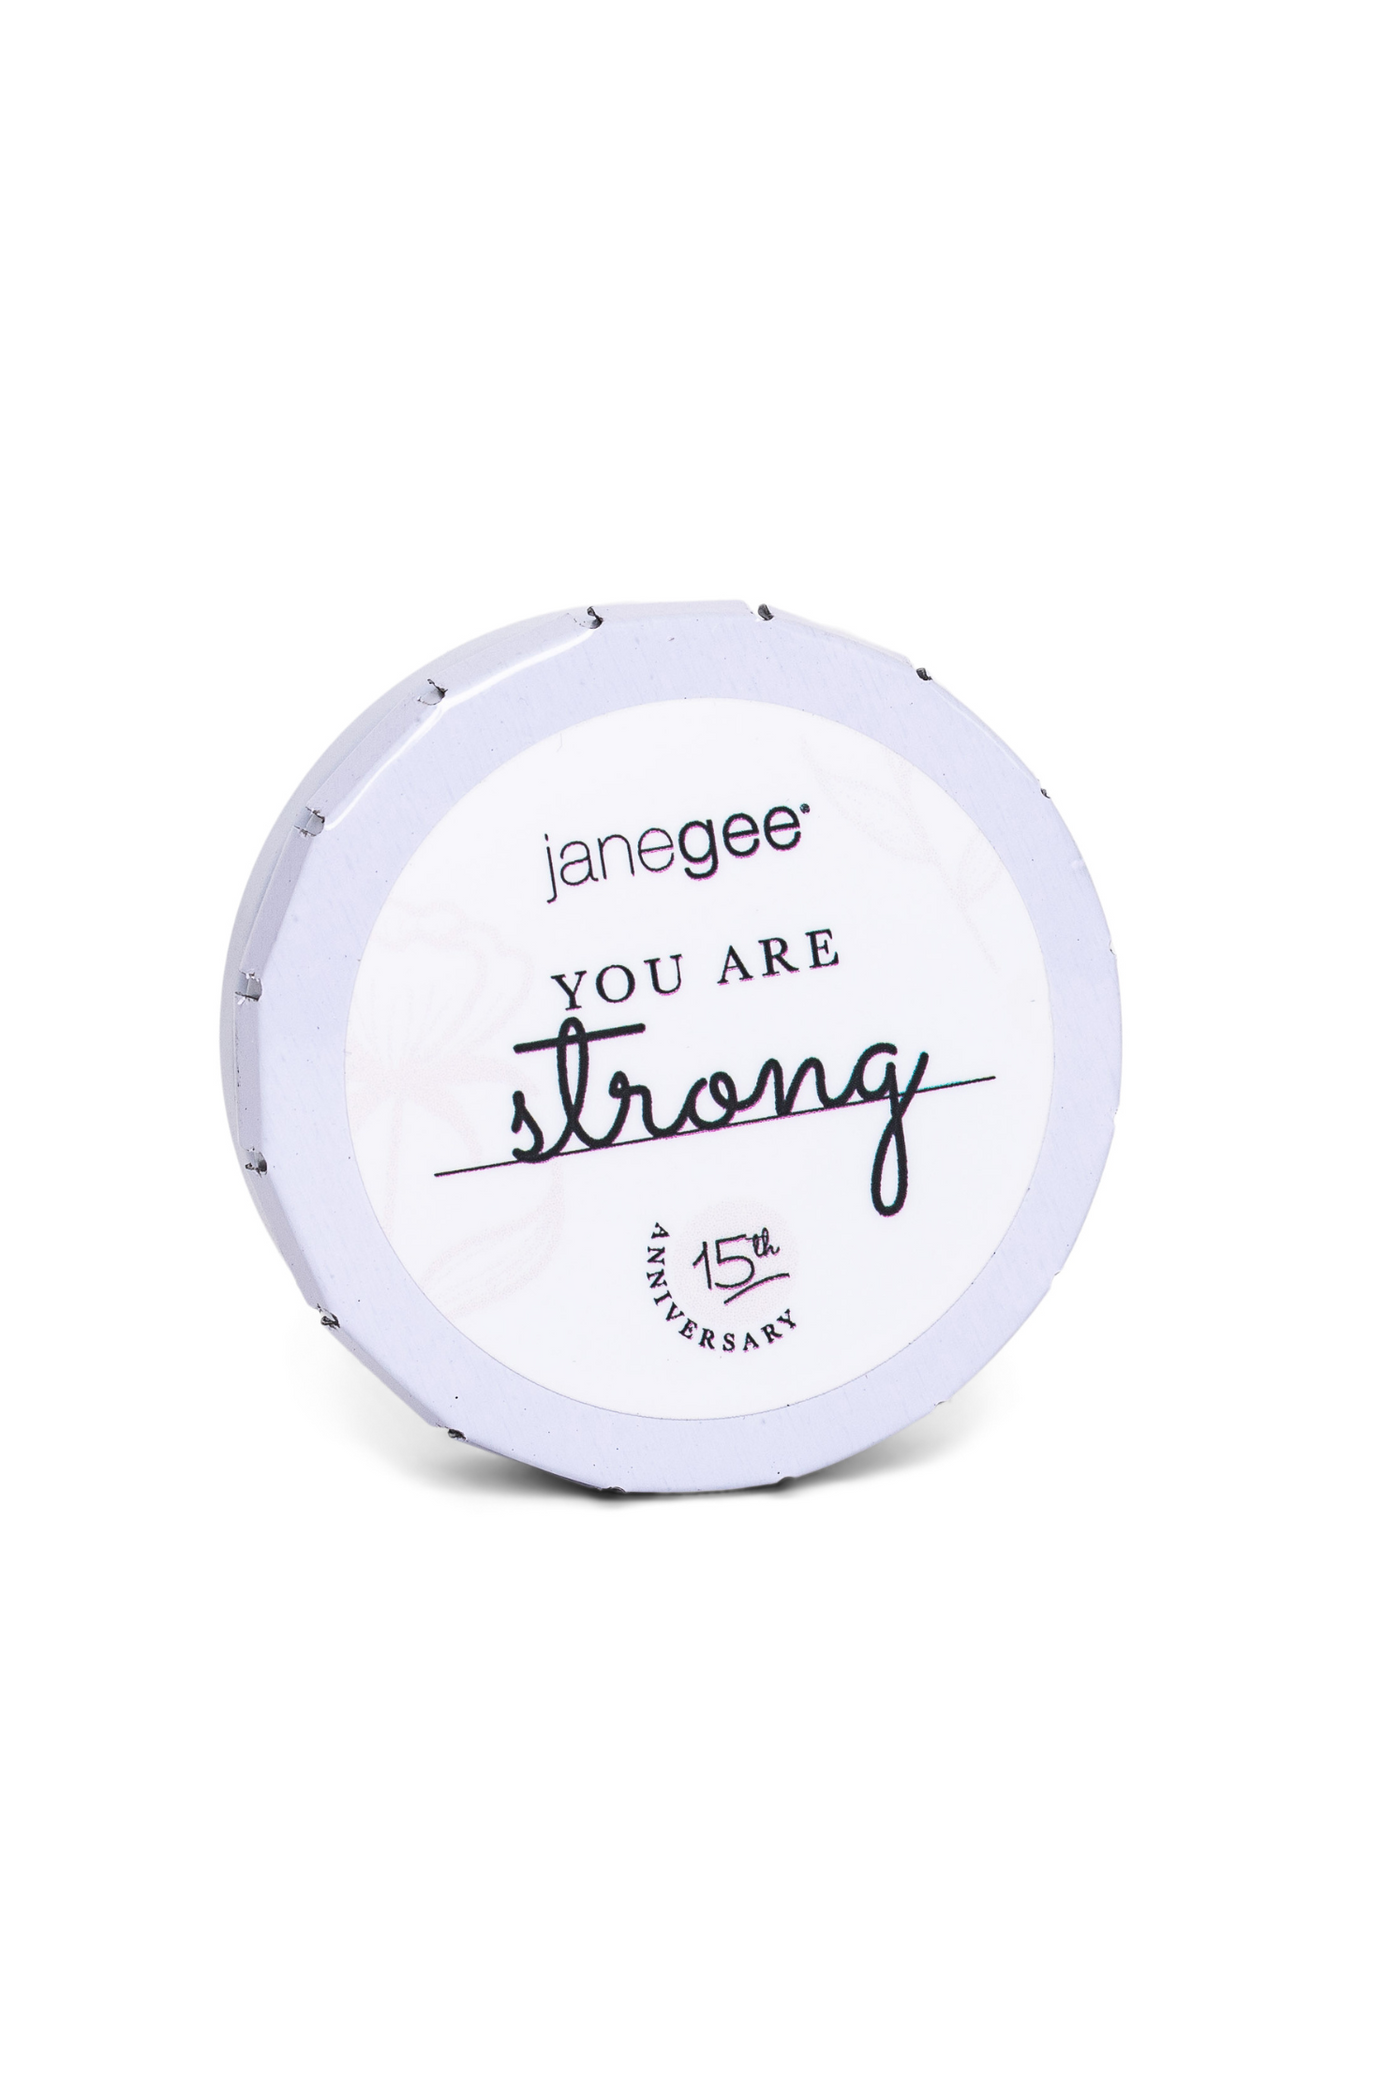 janegee 15th Anniversary Sweet Stick